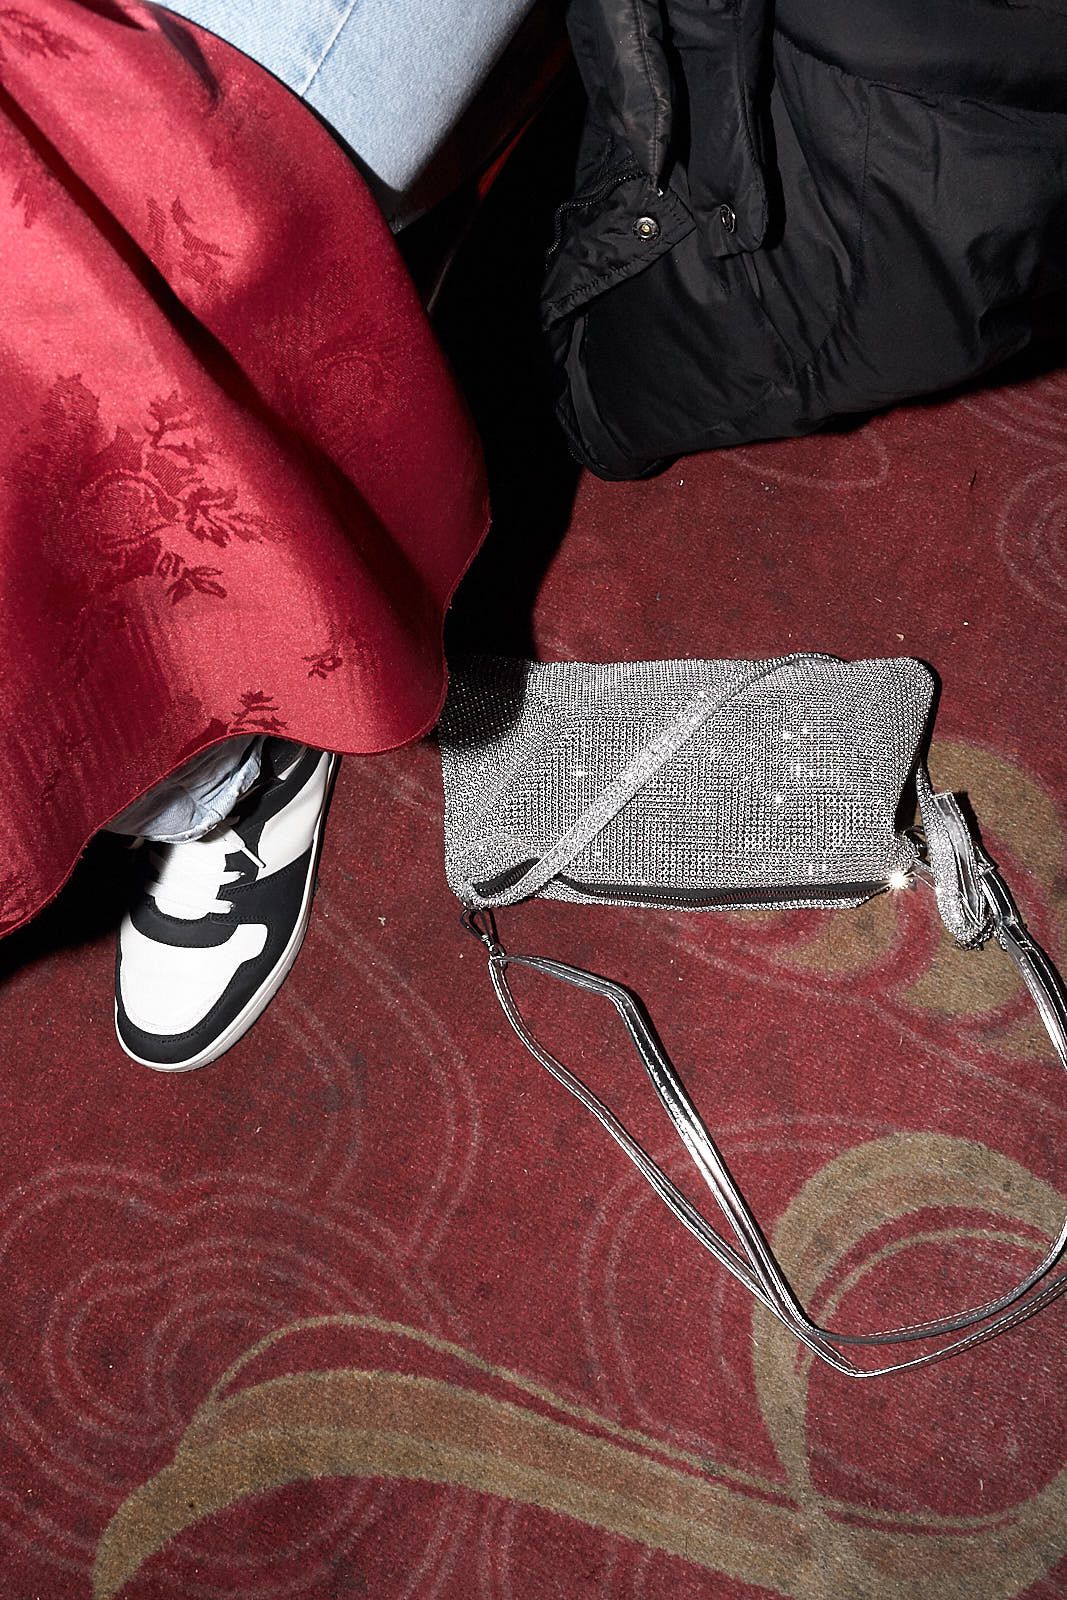 On the red carpet underneath Ceanna’s seat lies her silver rhinestone sparkling Primark handbag.